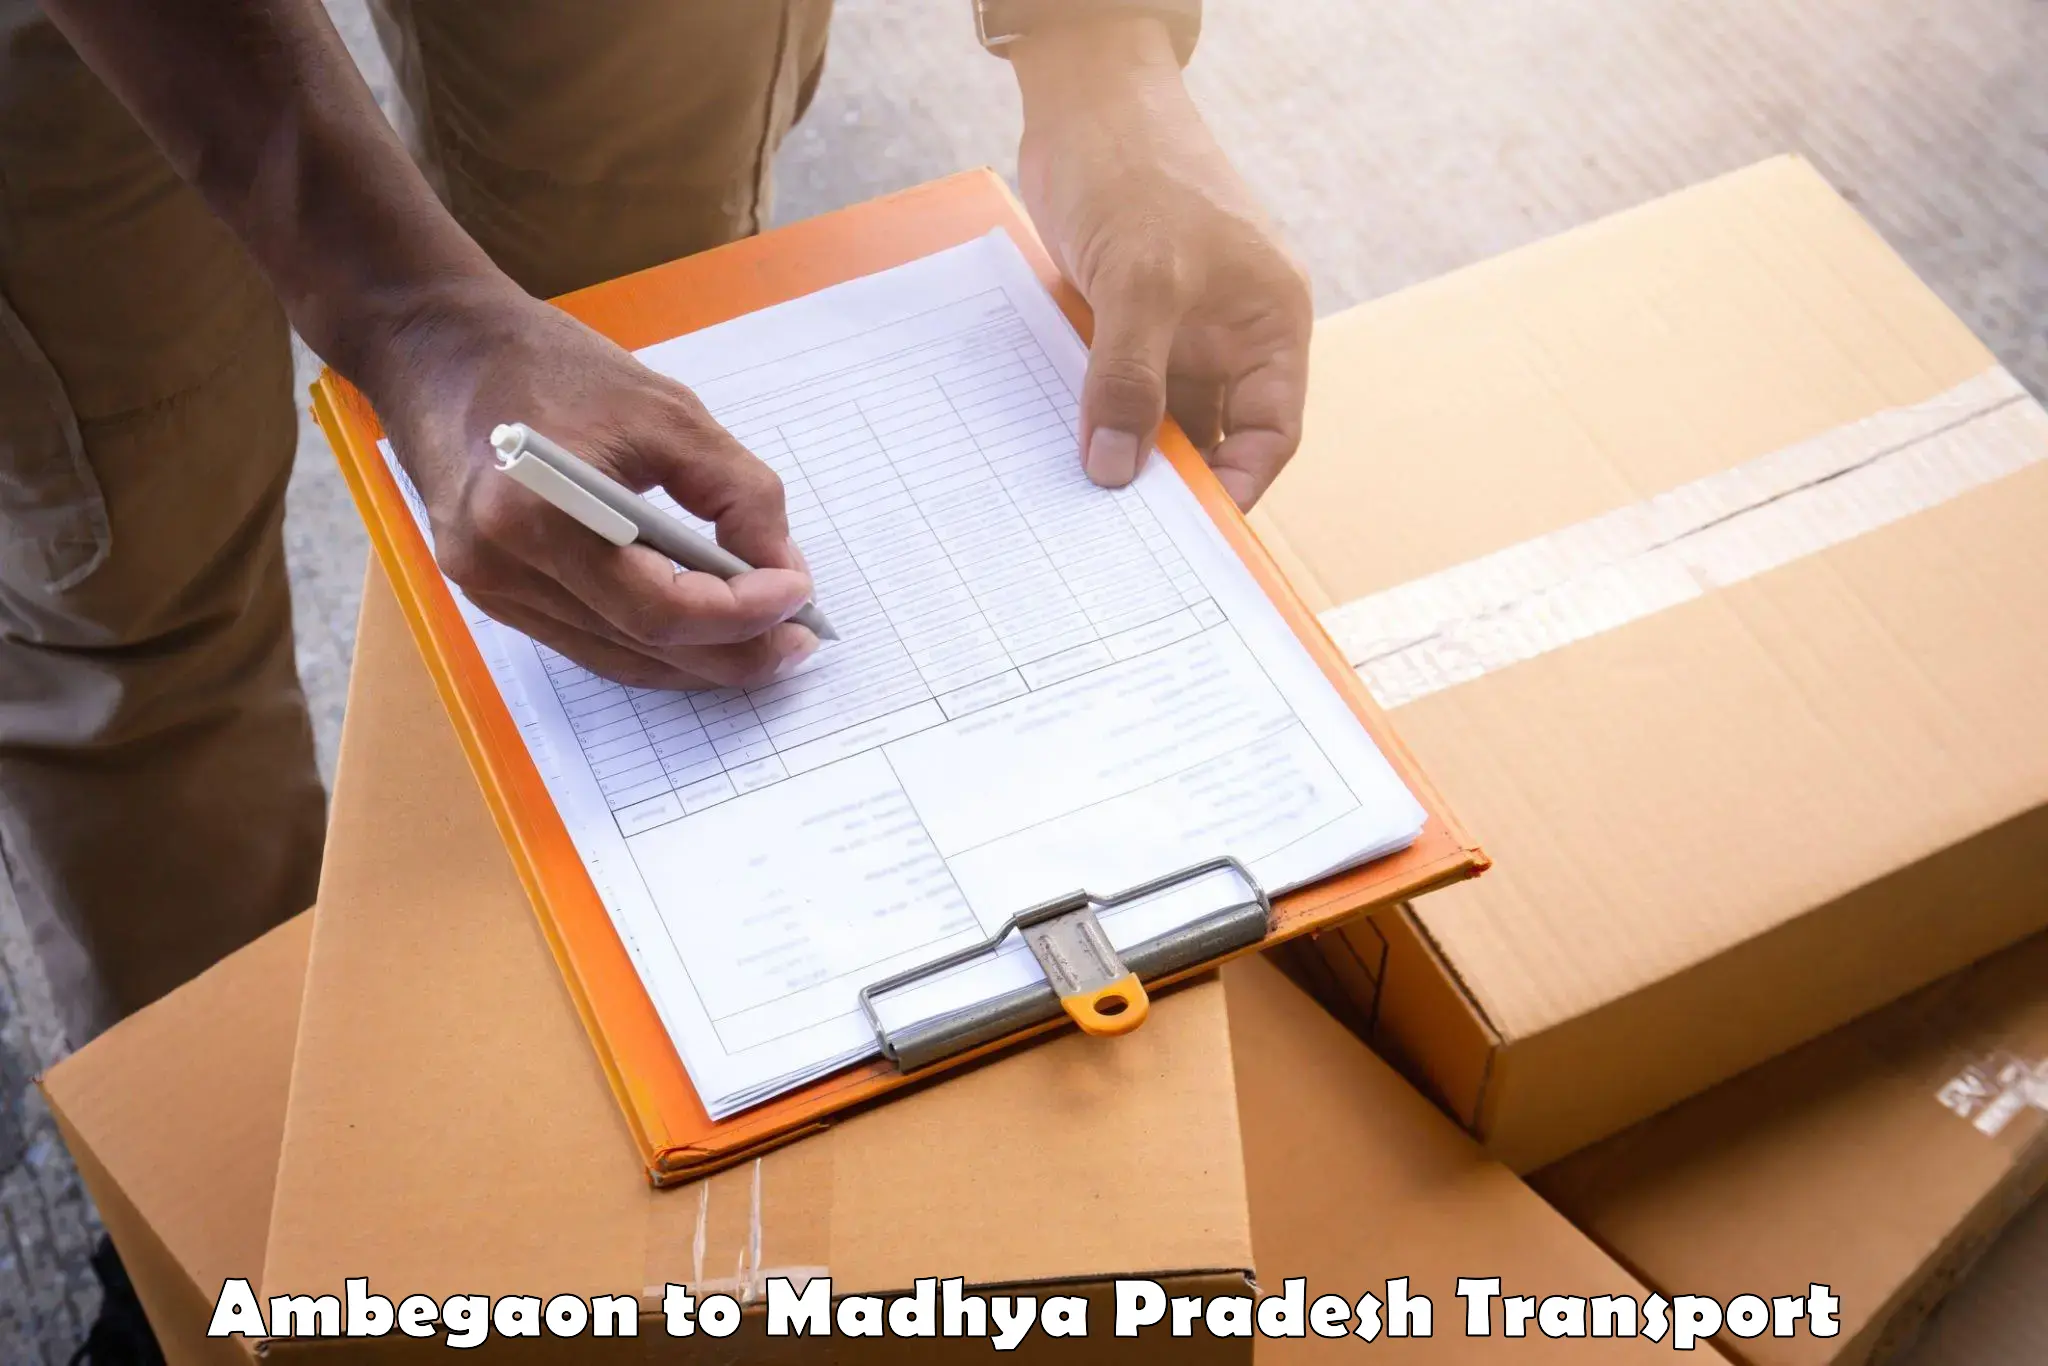 Truck transport companies in India Ambegaon to Hatta